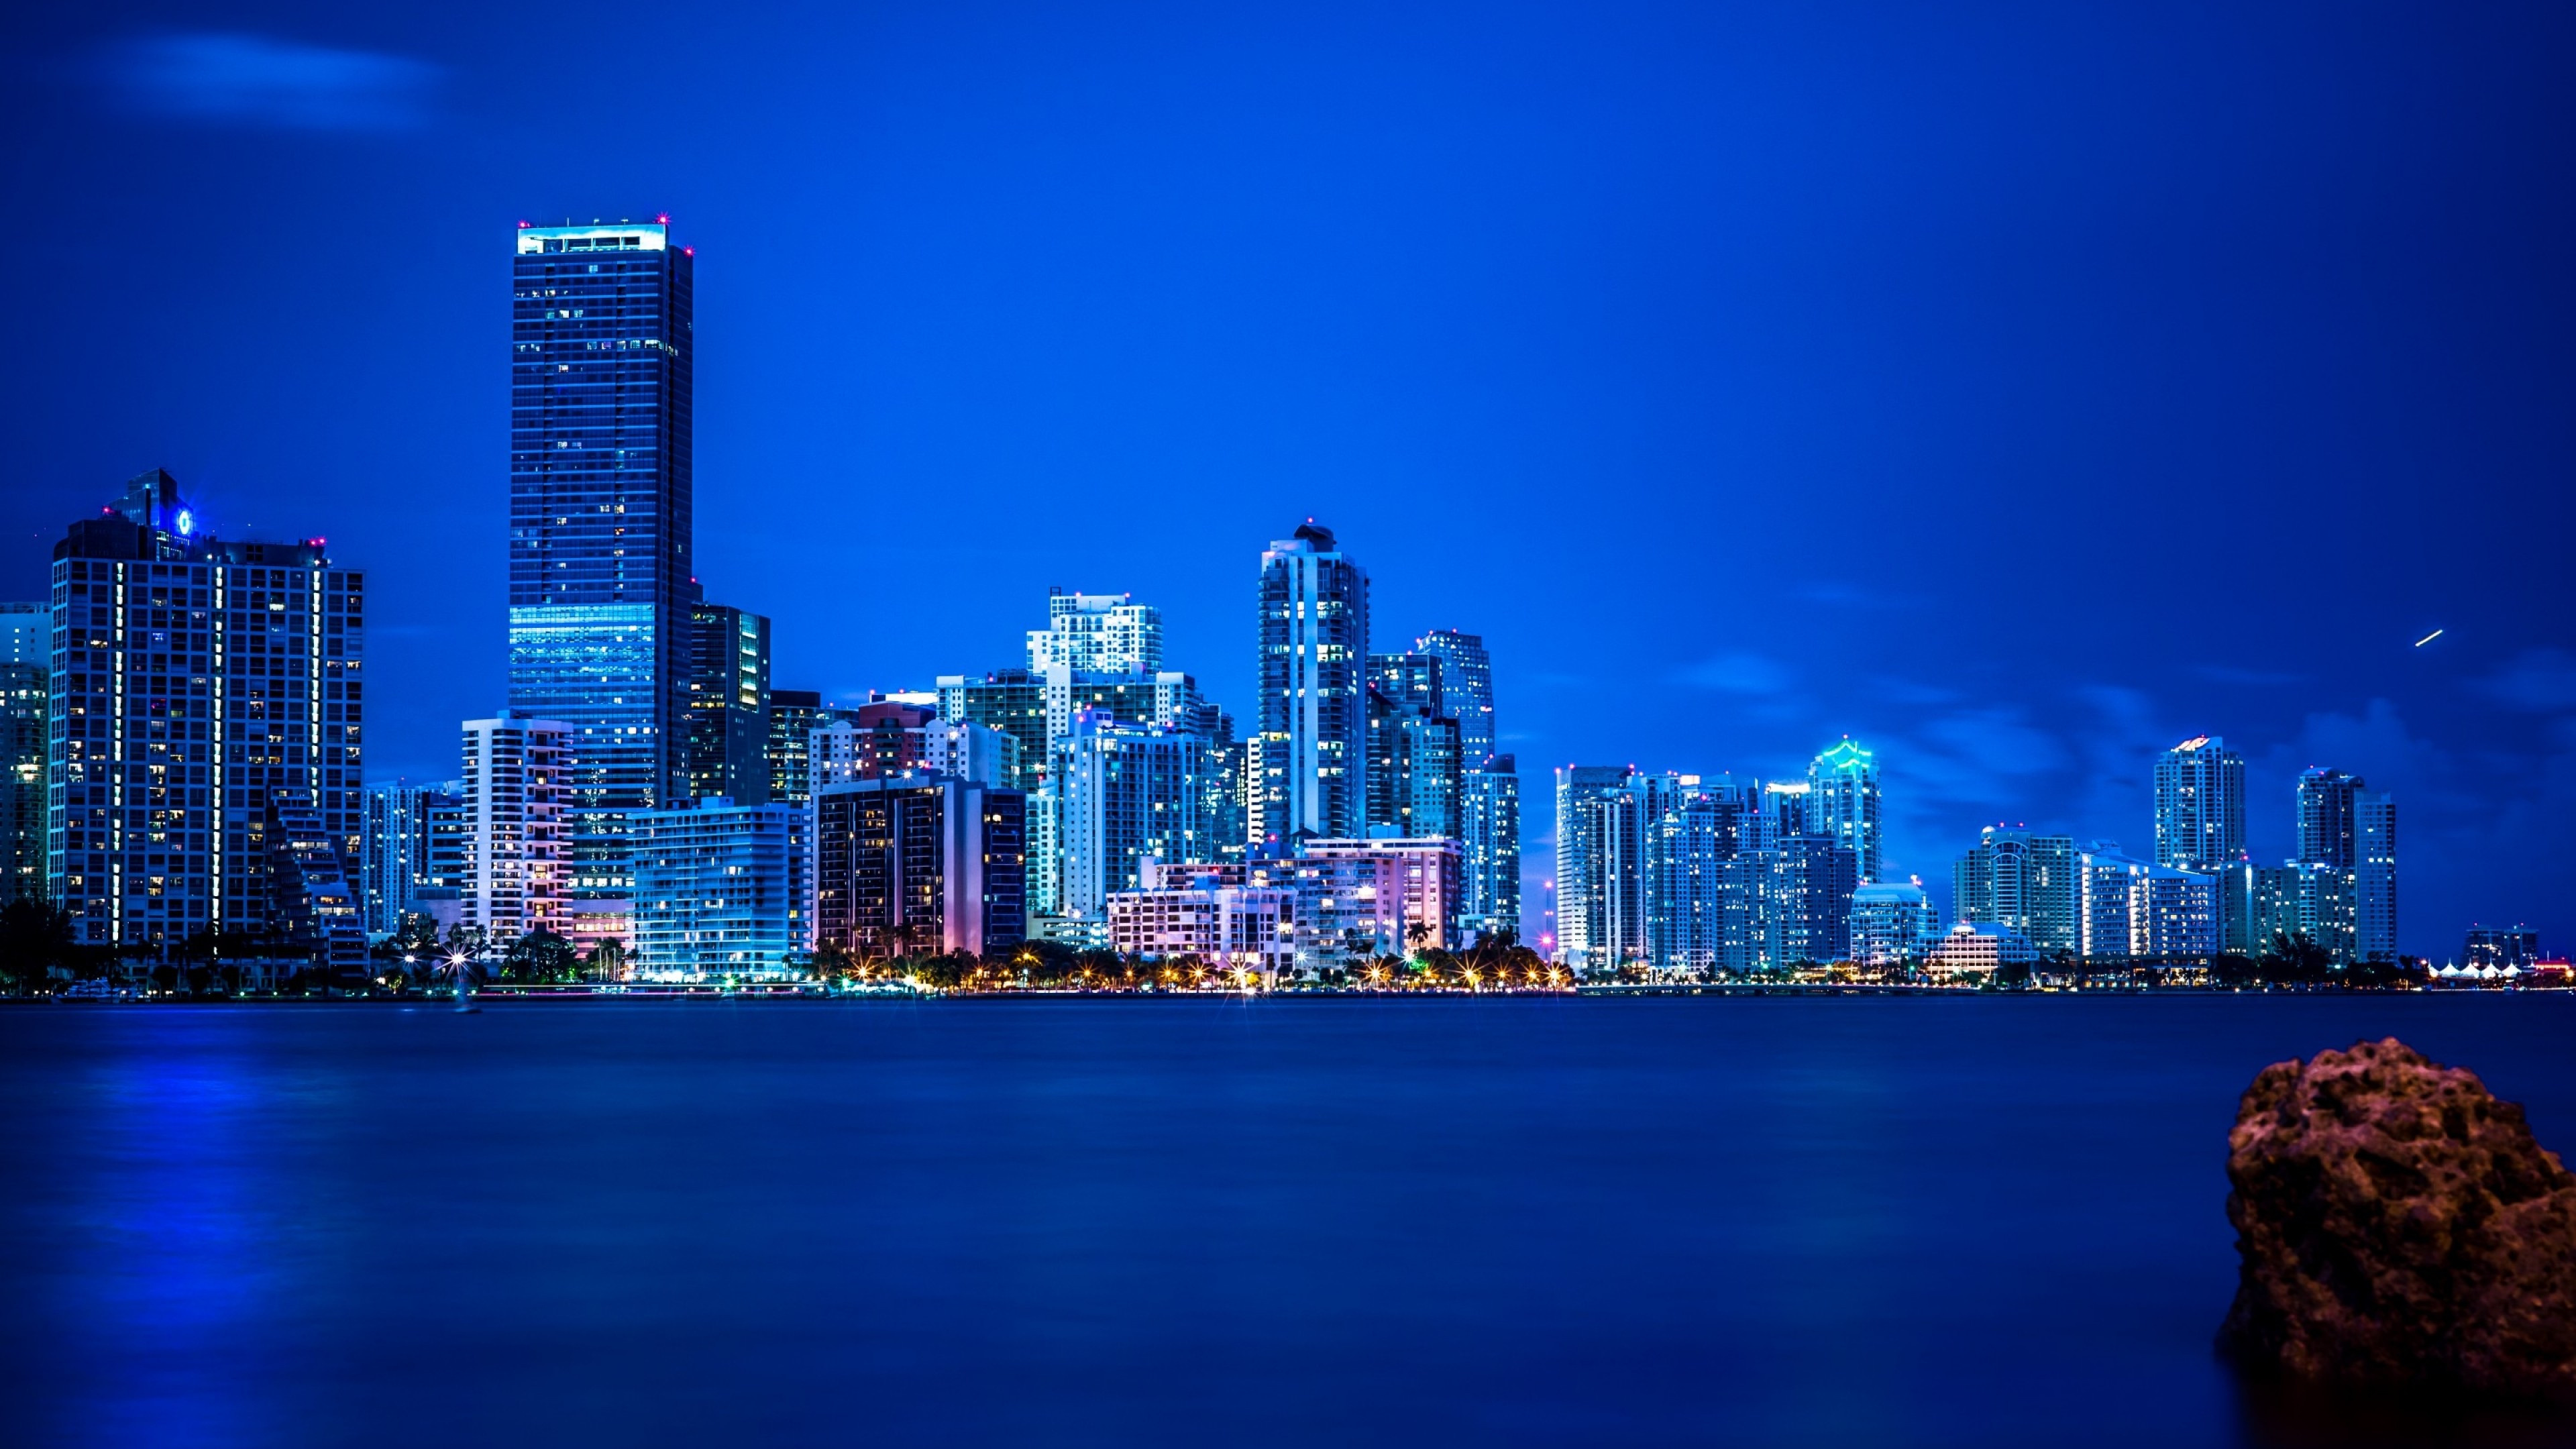 Miami travels, Cityscape wallpaper, Night lights, UHD TV, 3840x2160 4K Desktop